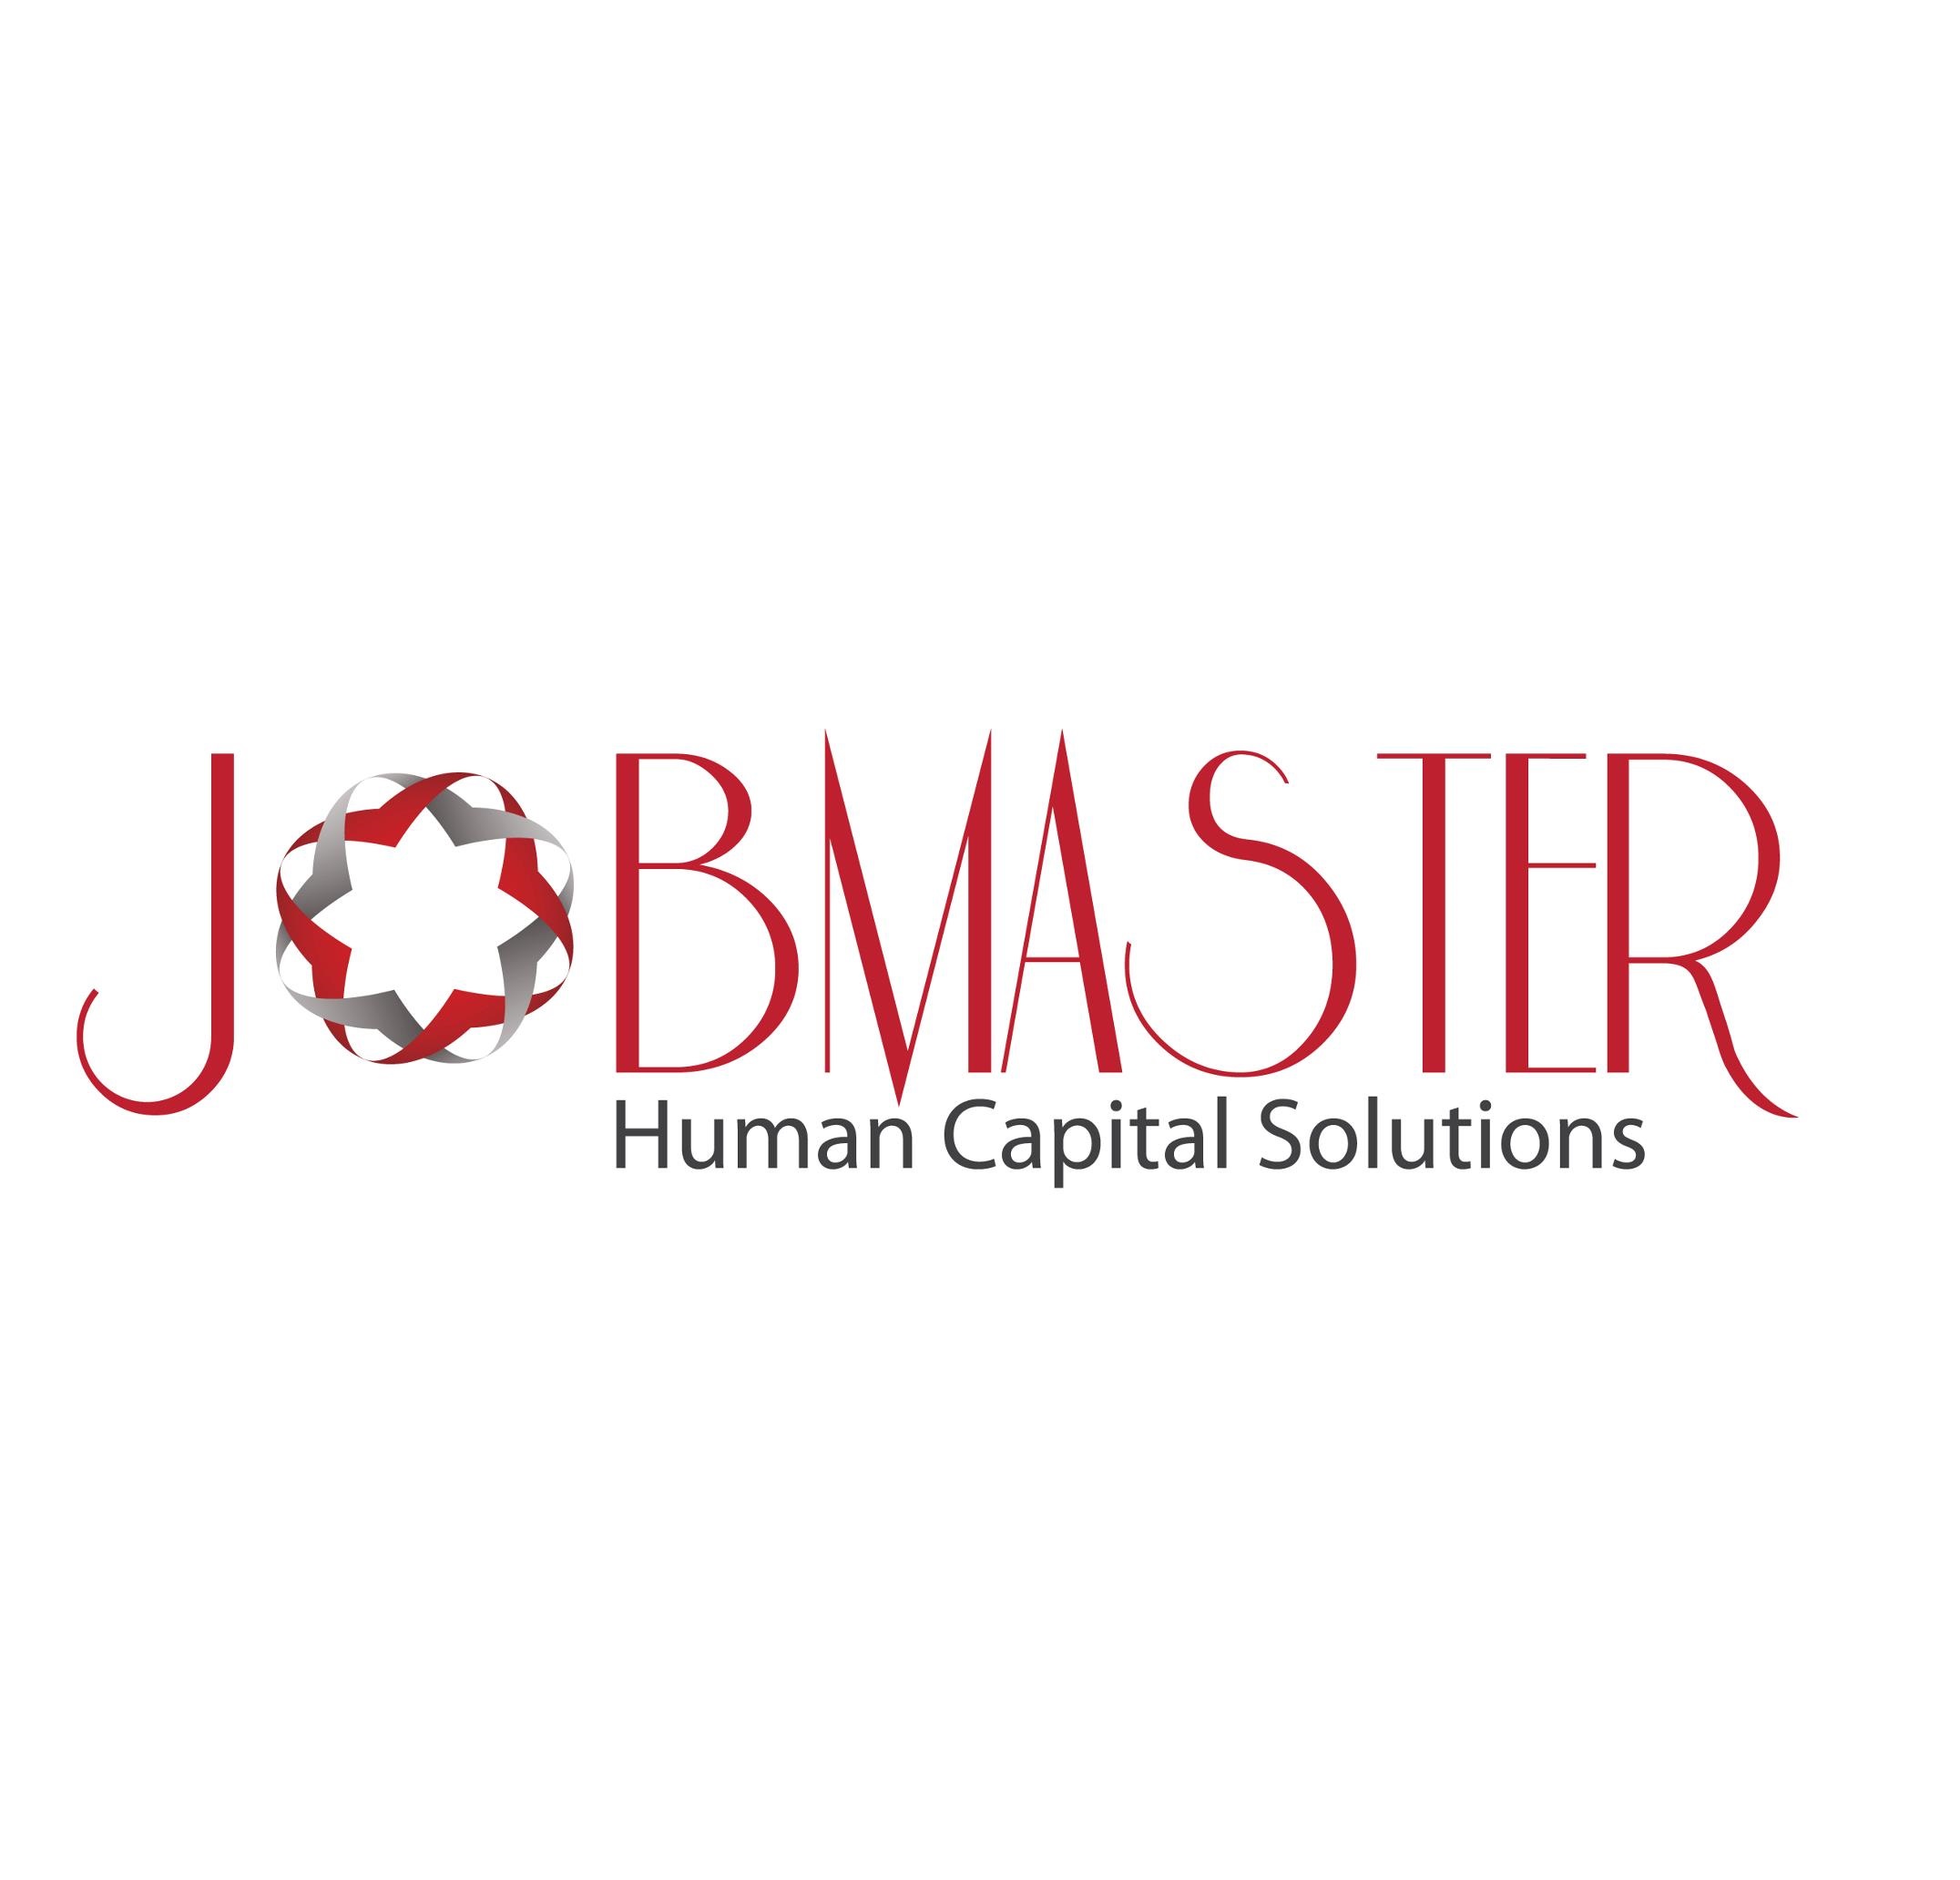 Jobmaster Group